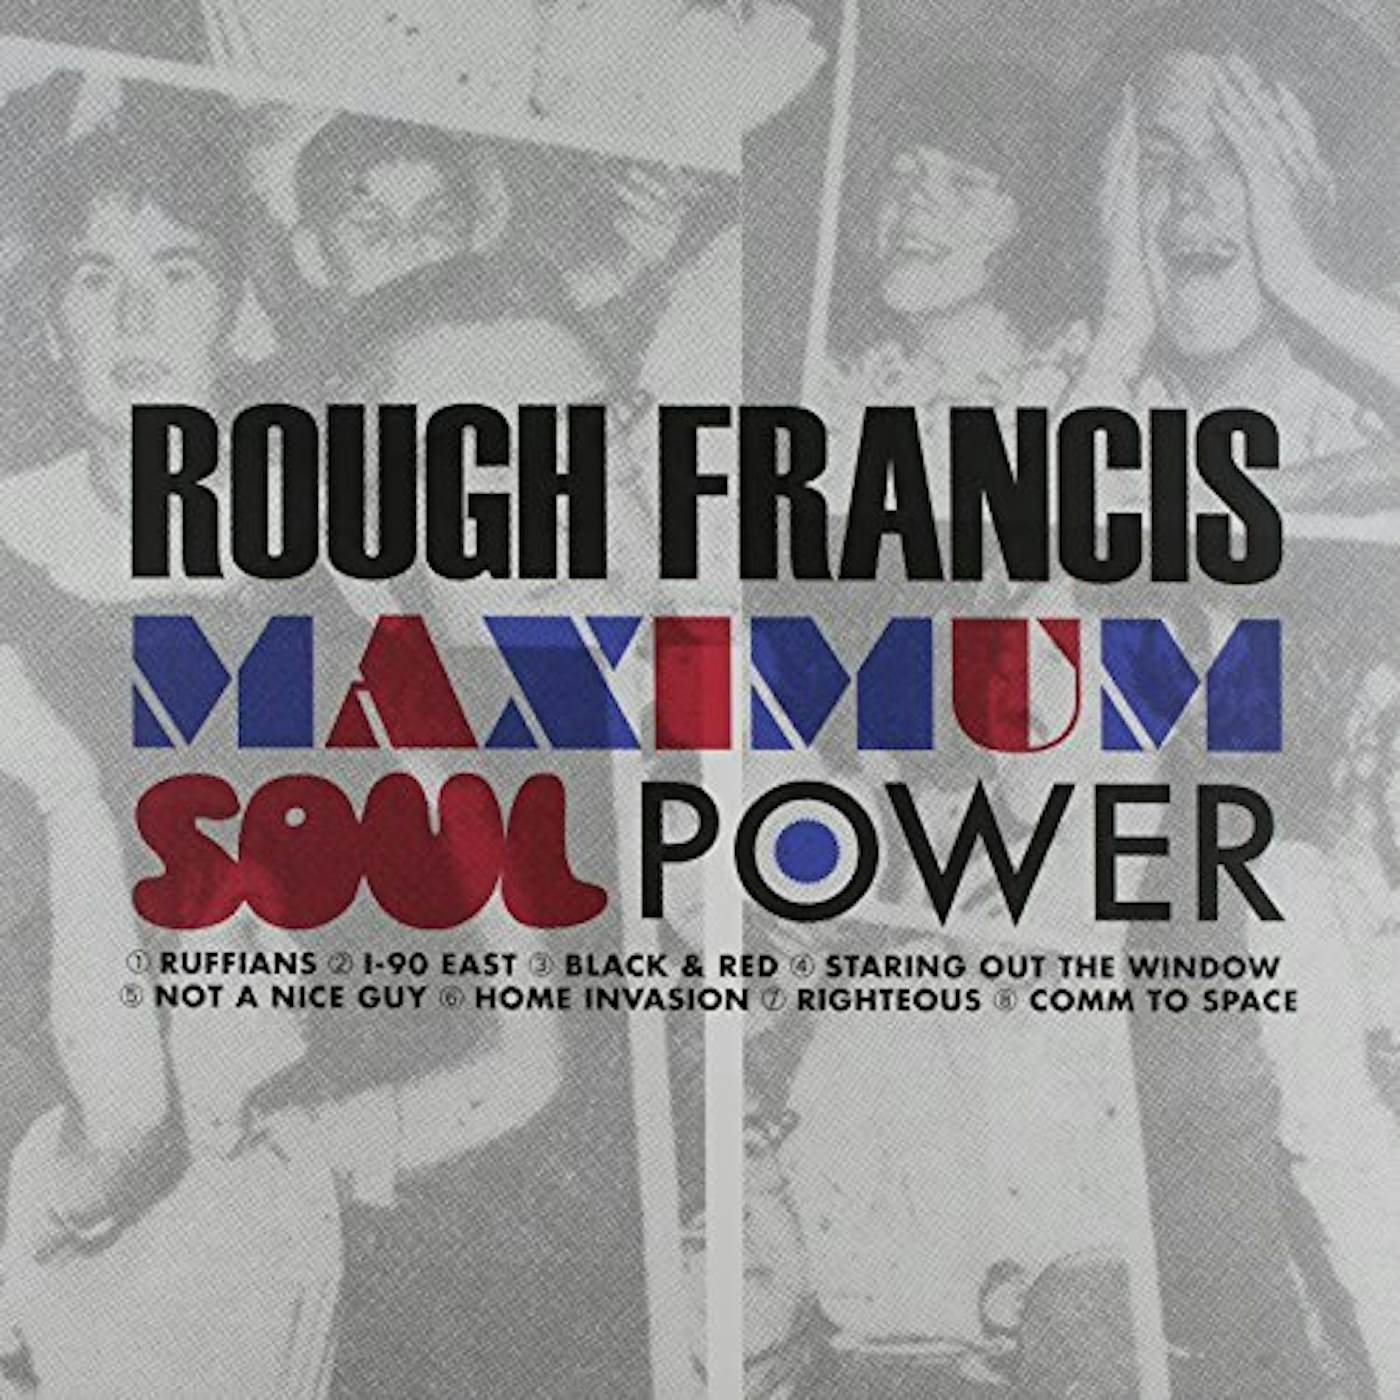 Rough Francis MAXIMUM SOUL POWER Vinyl Record